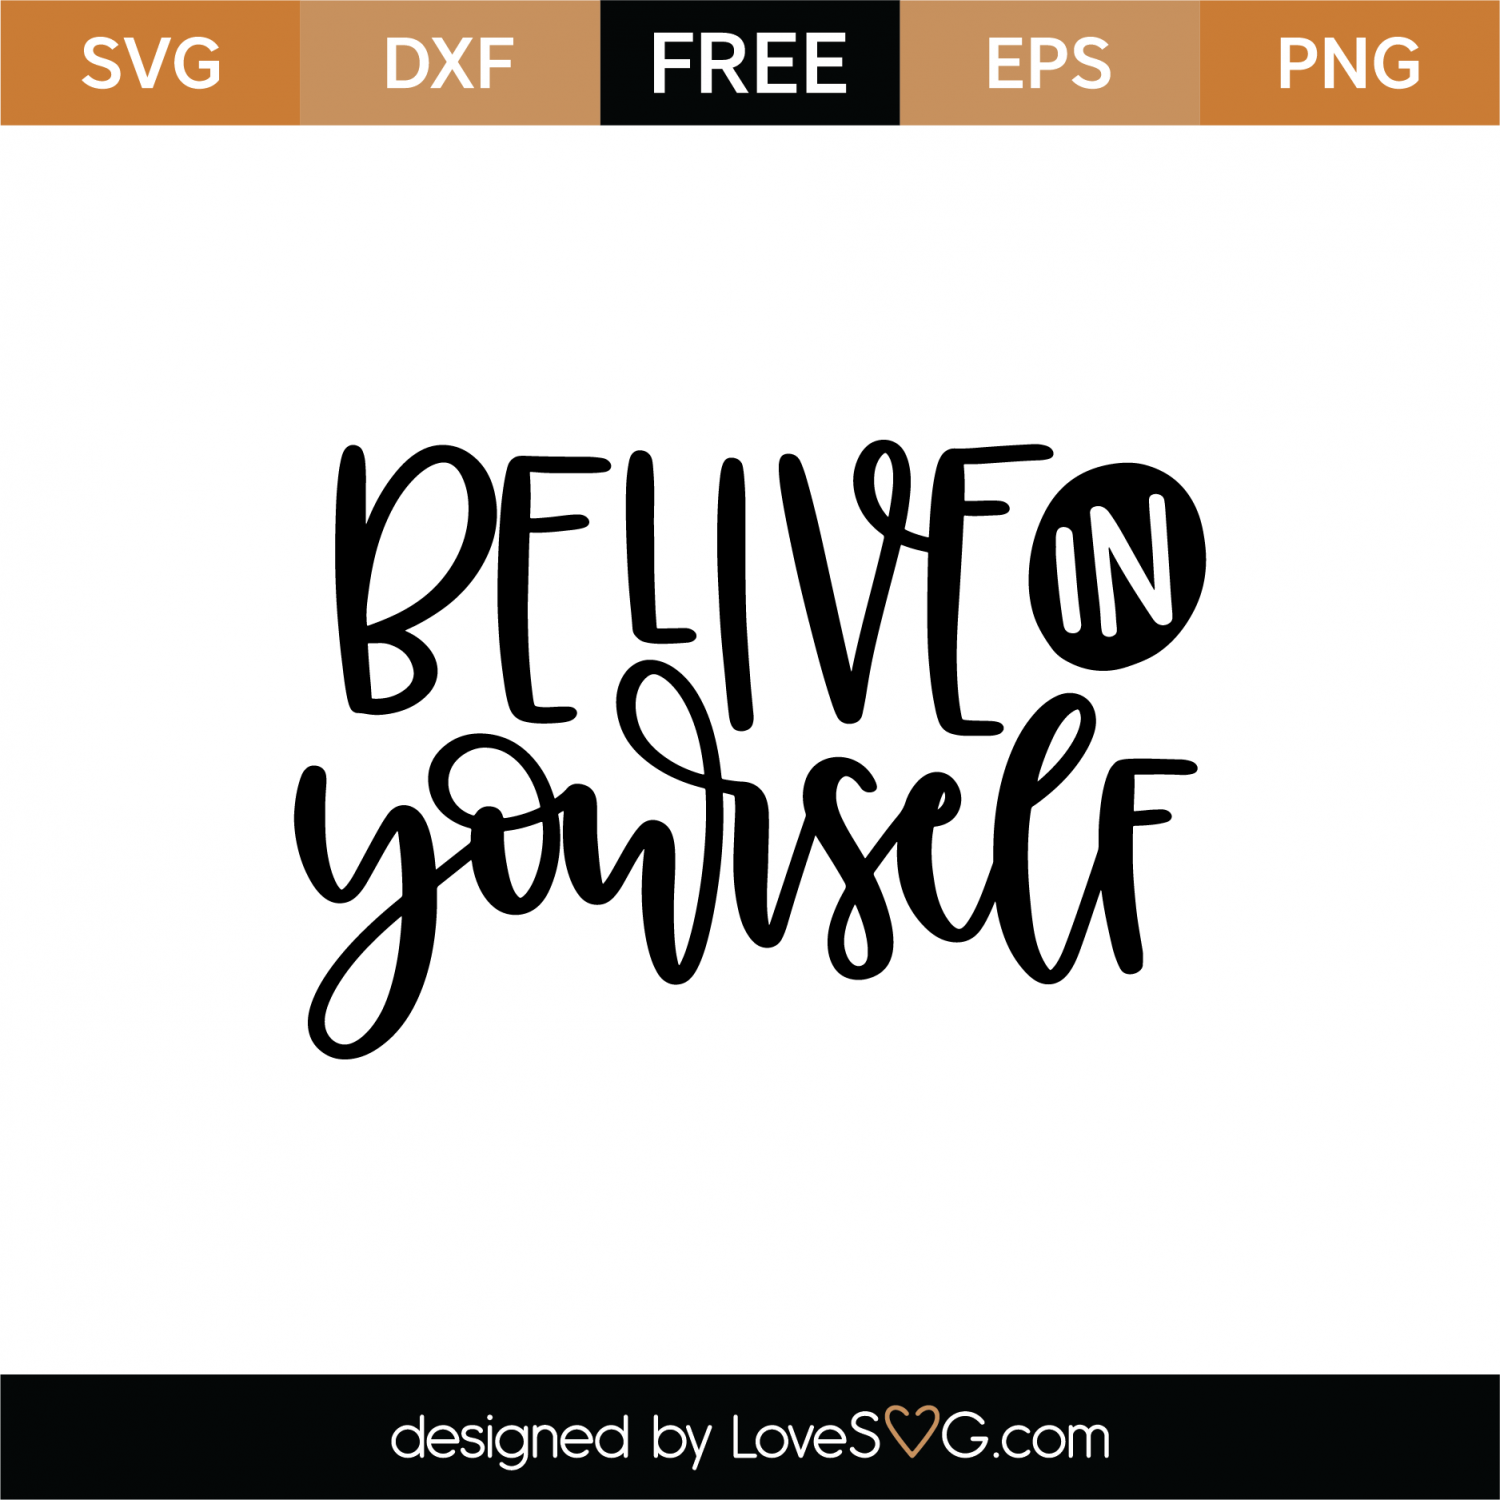 Free Believe In Yourself SVG Cut File | Lovesvg.com